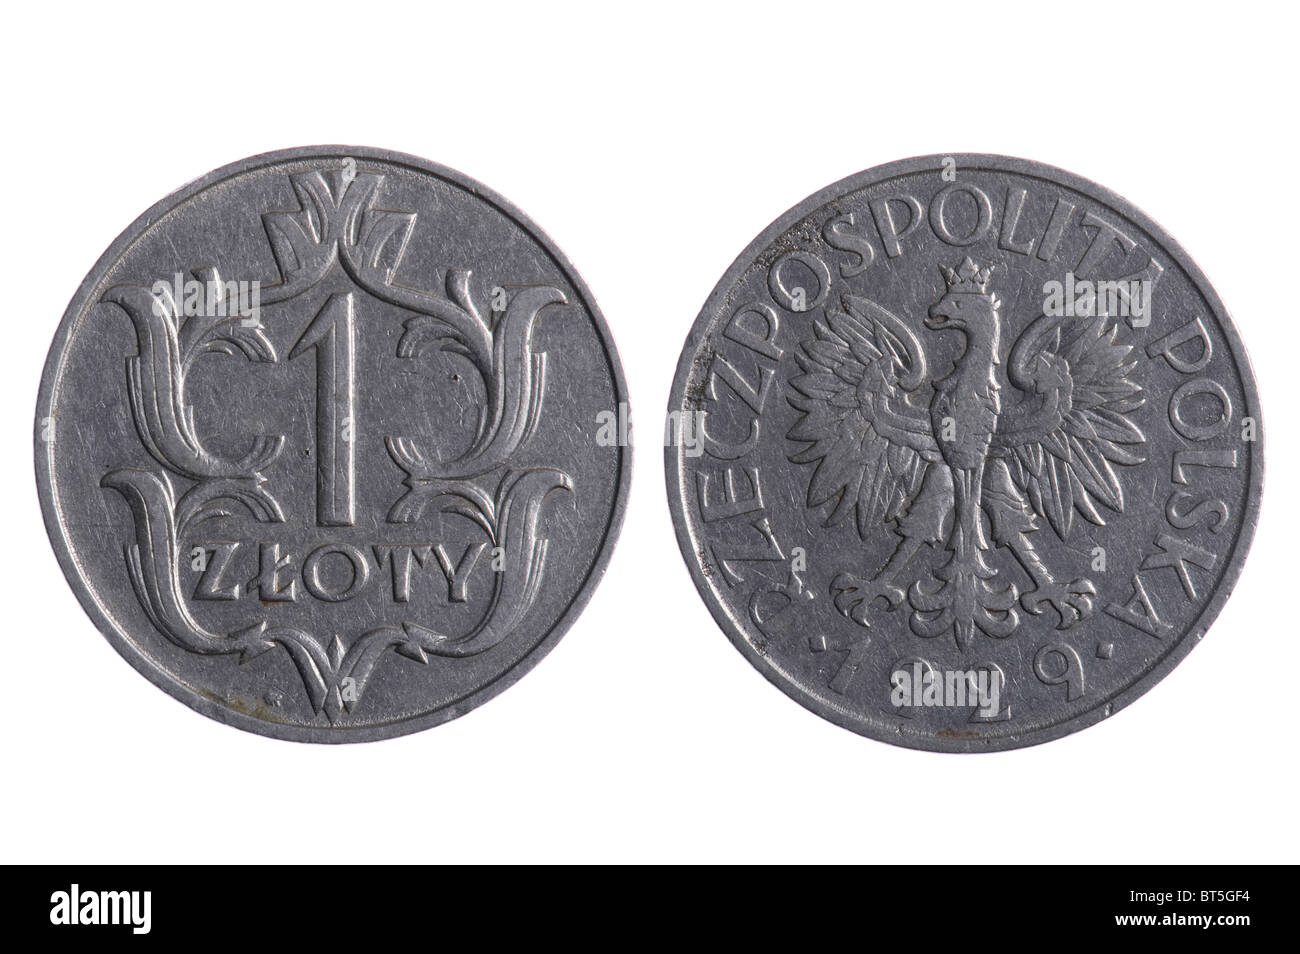 Objekt auf weiß - Polska Münzen hautnah Stockfoto